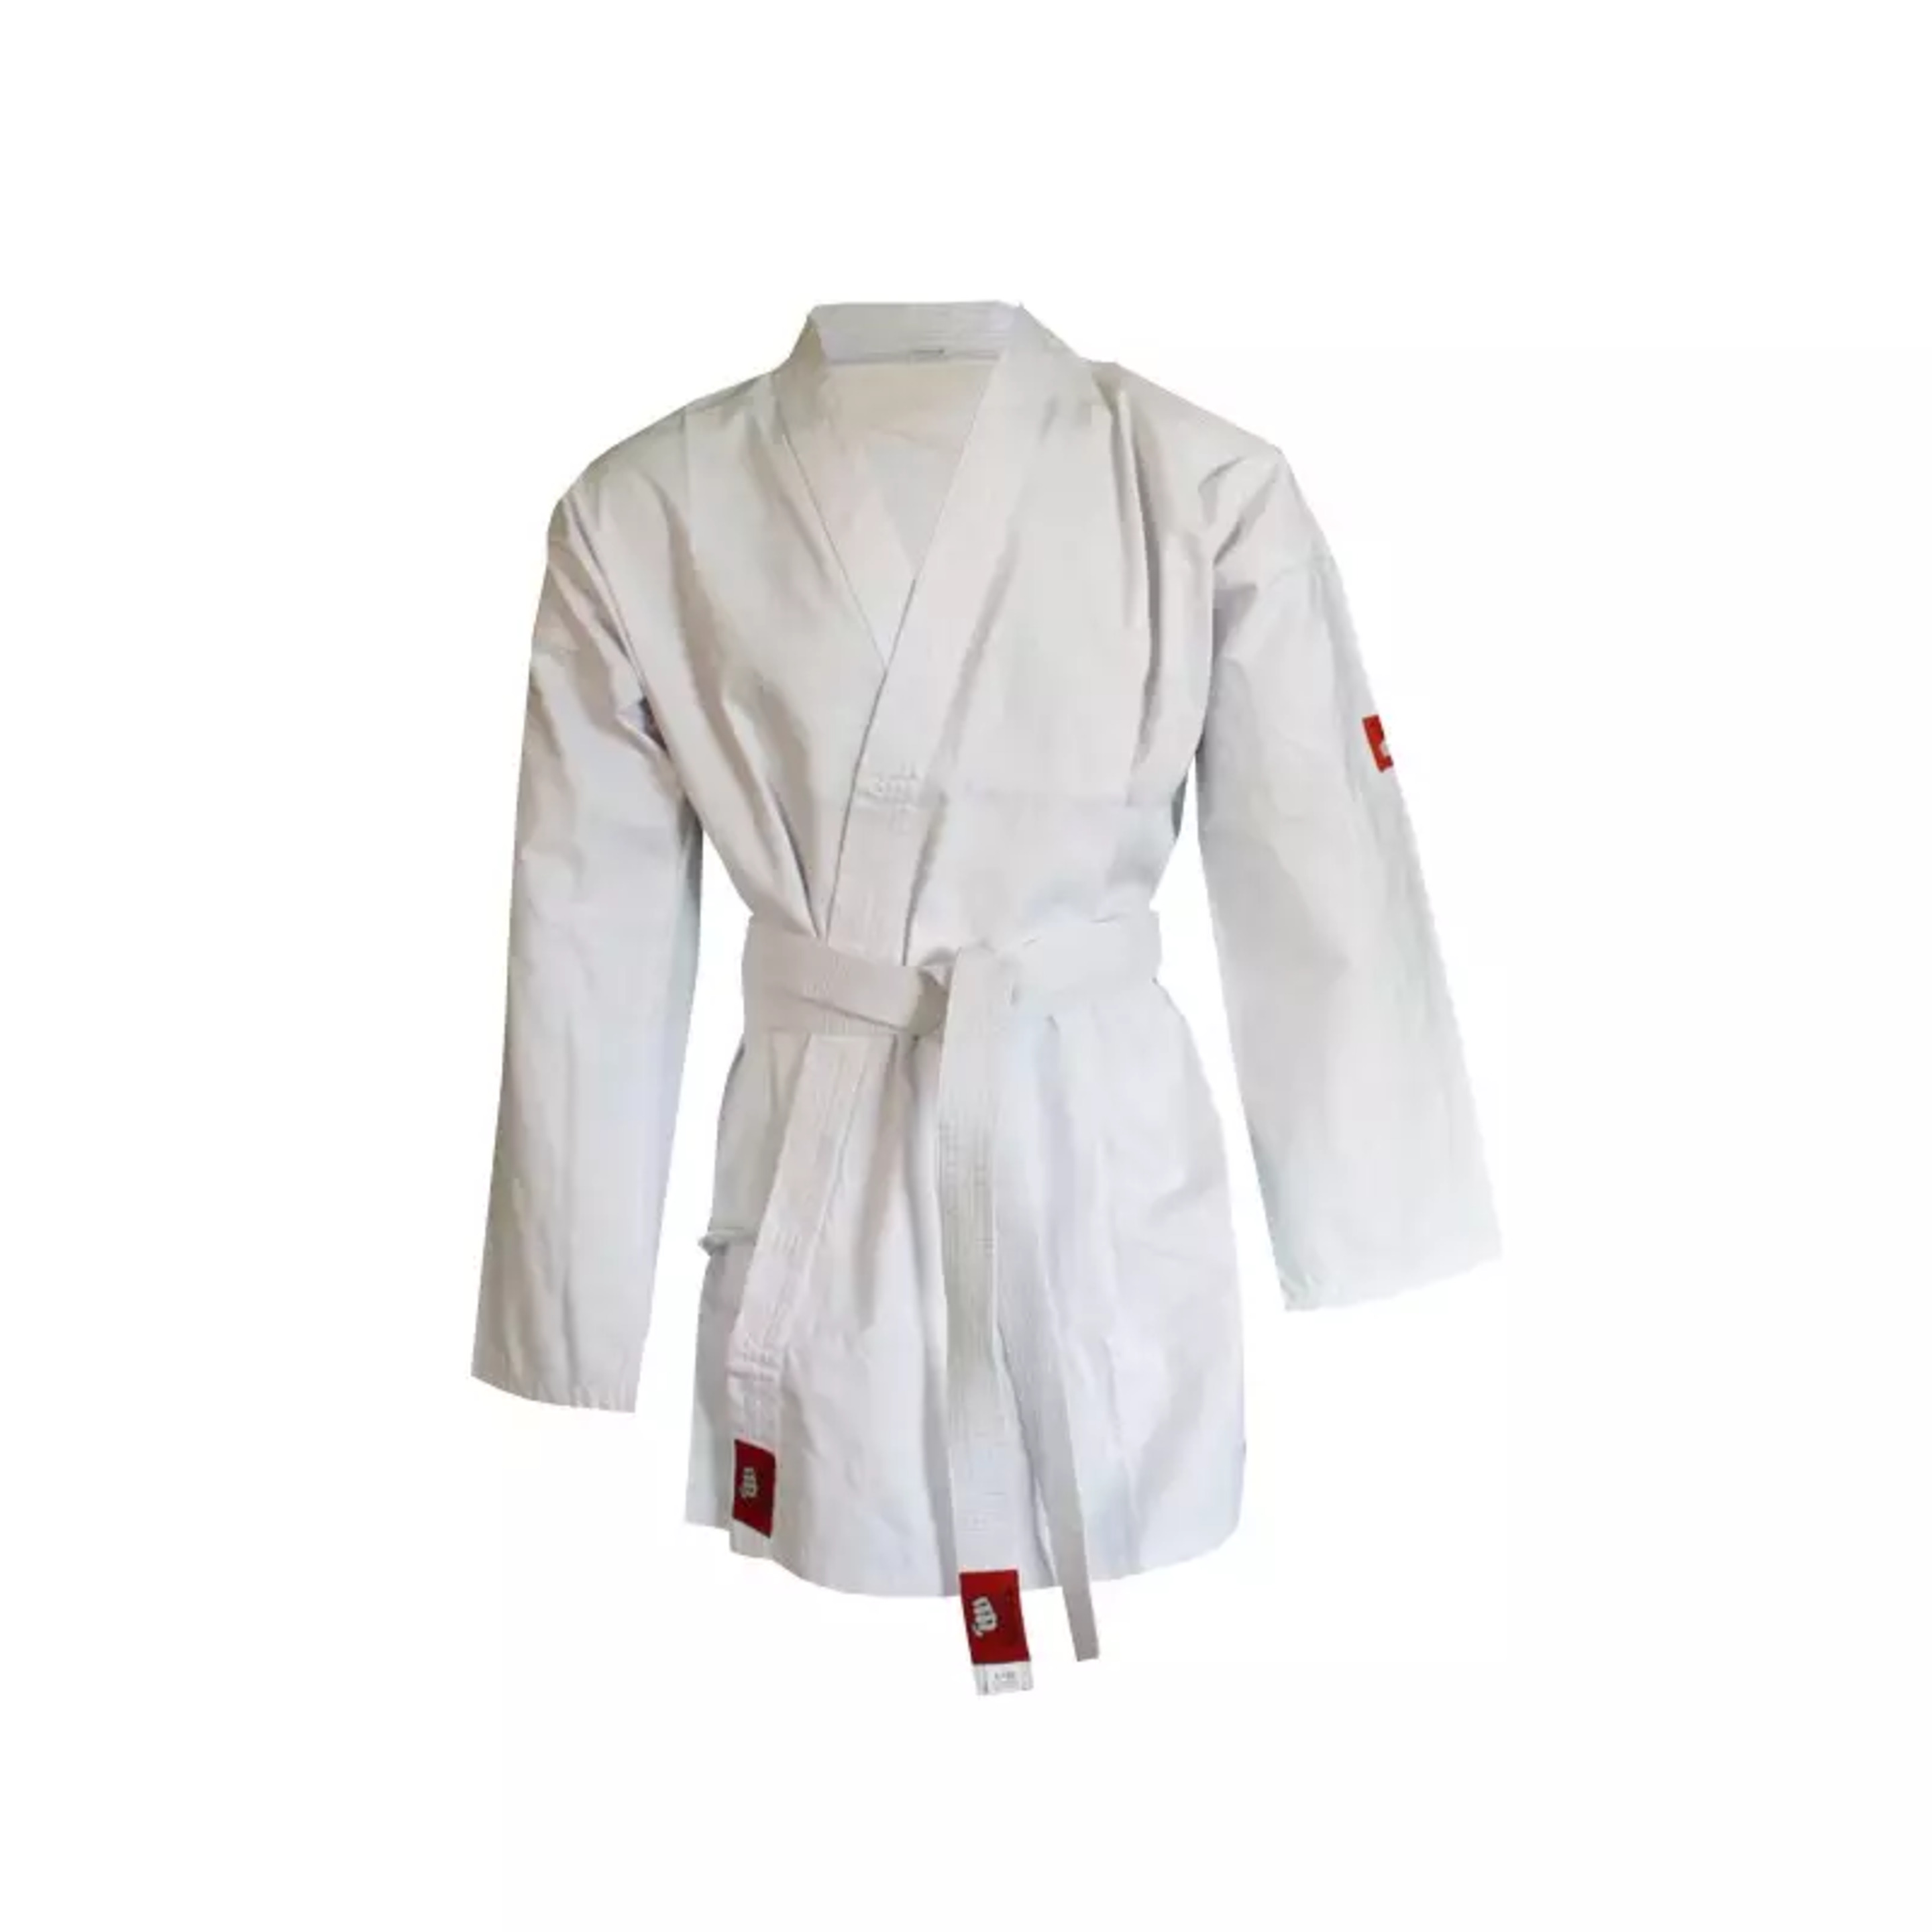 Judogi Yosihiro Blanco -kimono Judo- 100%  -incl. Cinturon Blanco   6/190 Cm